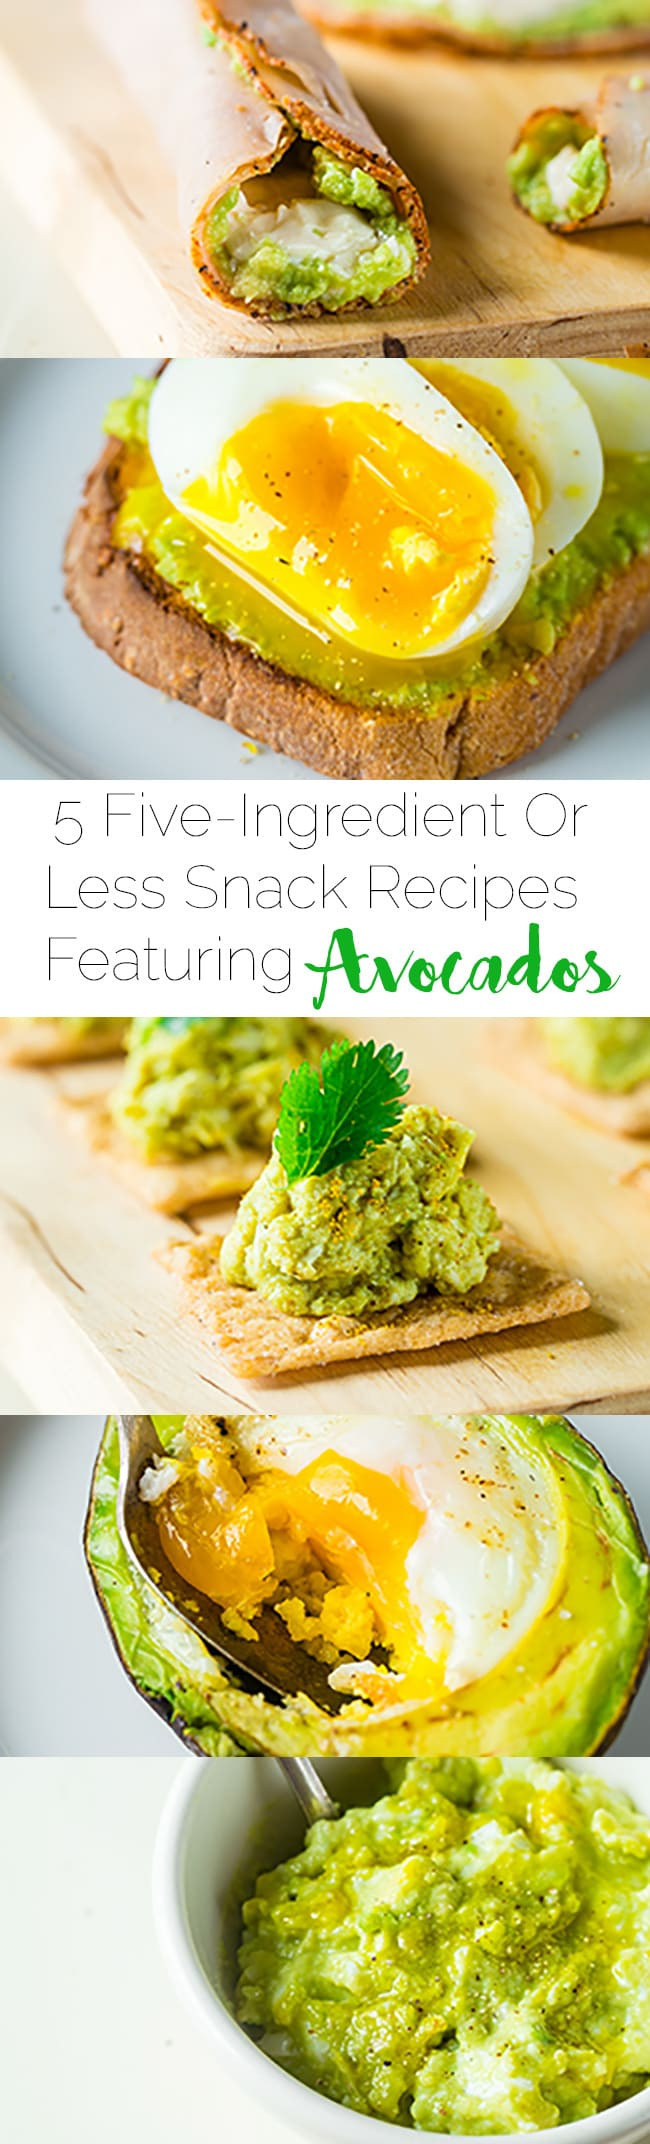 Avocado Snack Recipes
 Healthy Snack Recipes with Avocado